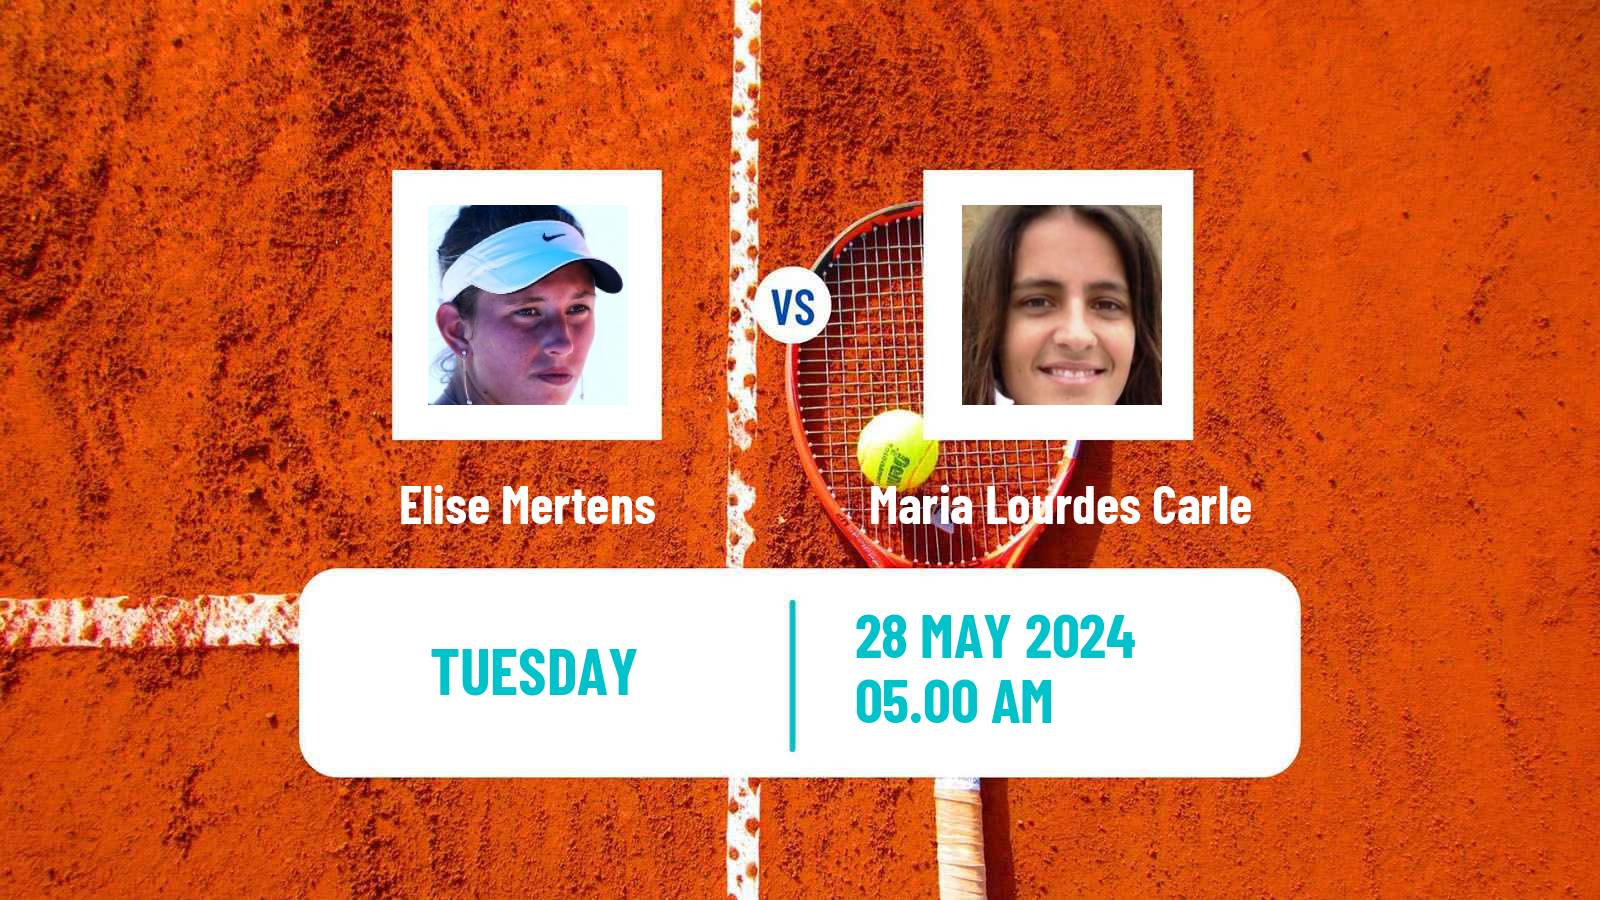 Tennis WTA Roland Garros Elise Mertens - Maria Lourdes Carle